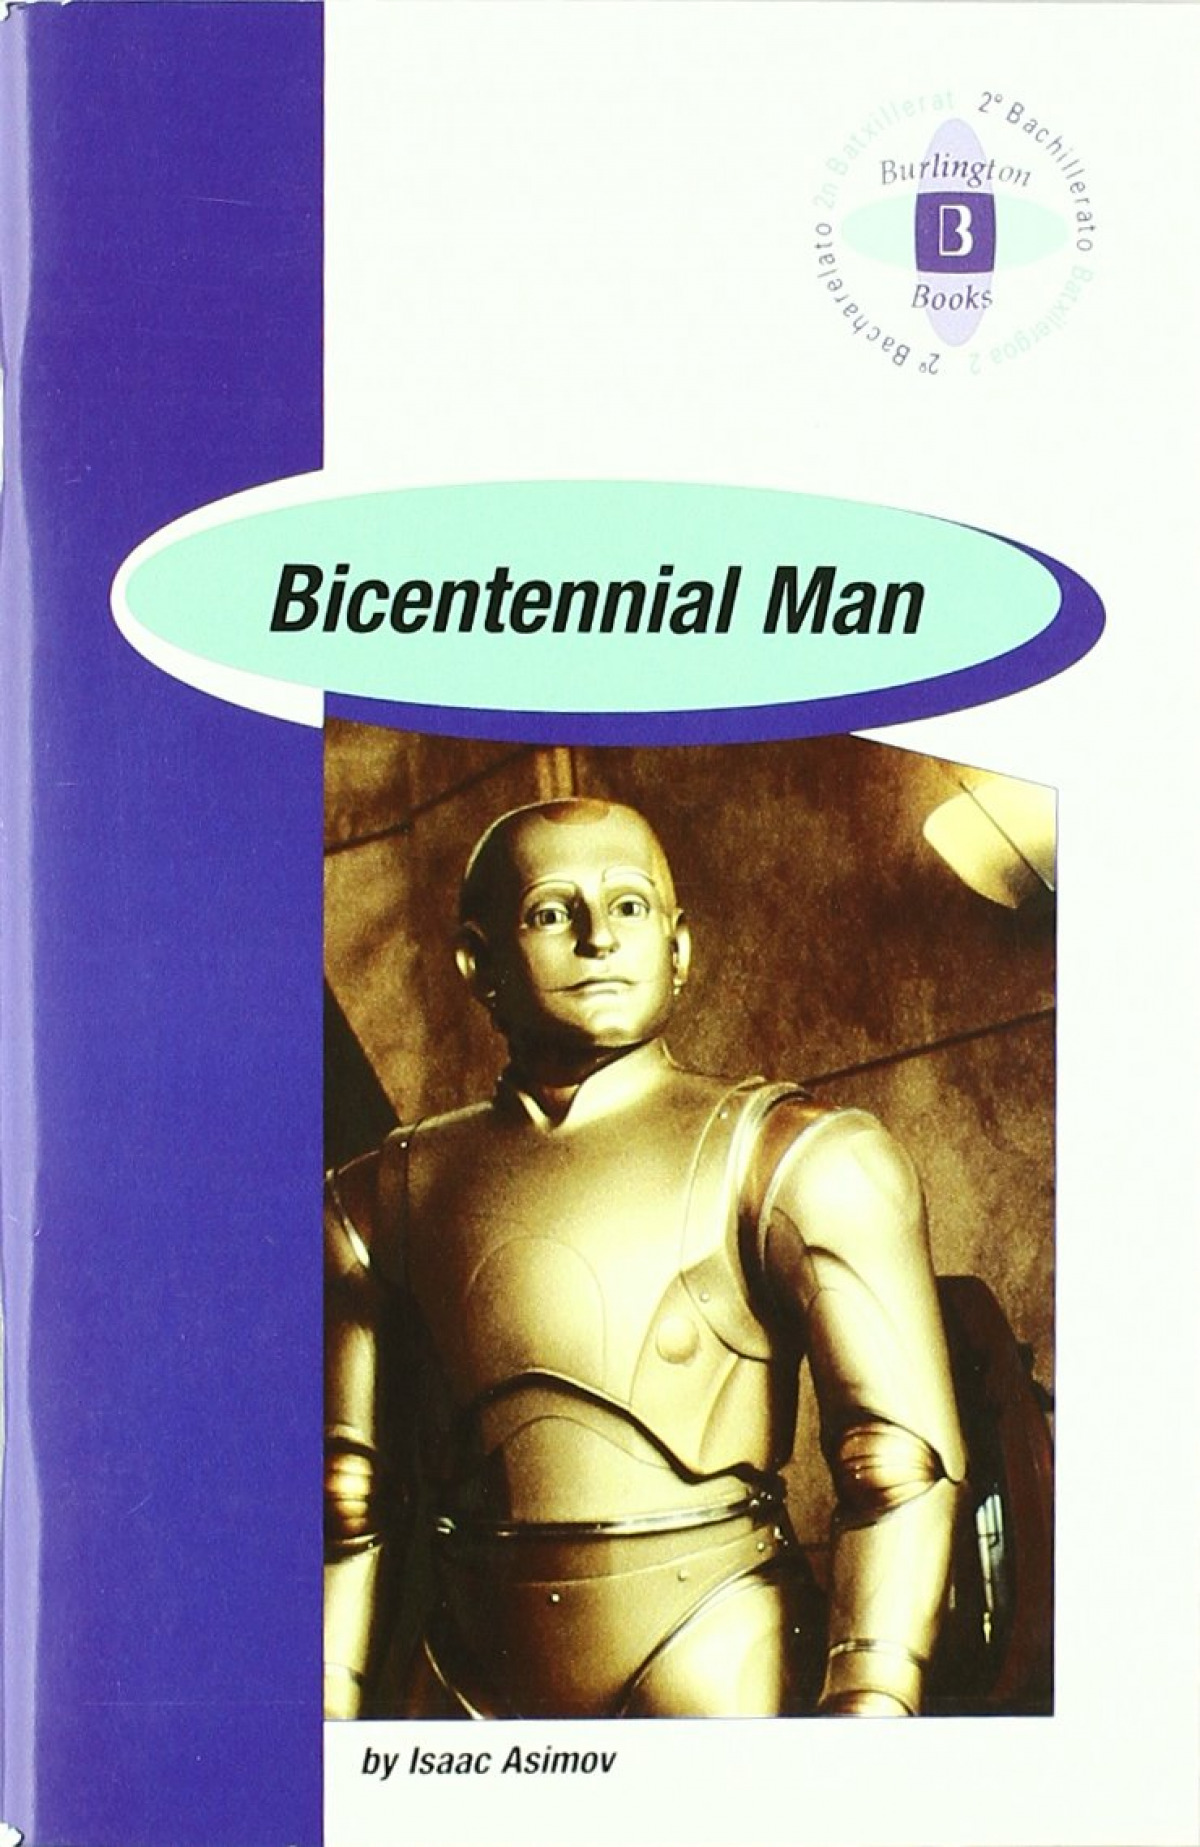 Bicentennial man 2 bto - Asimov, Isaac